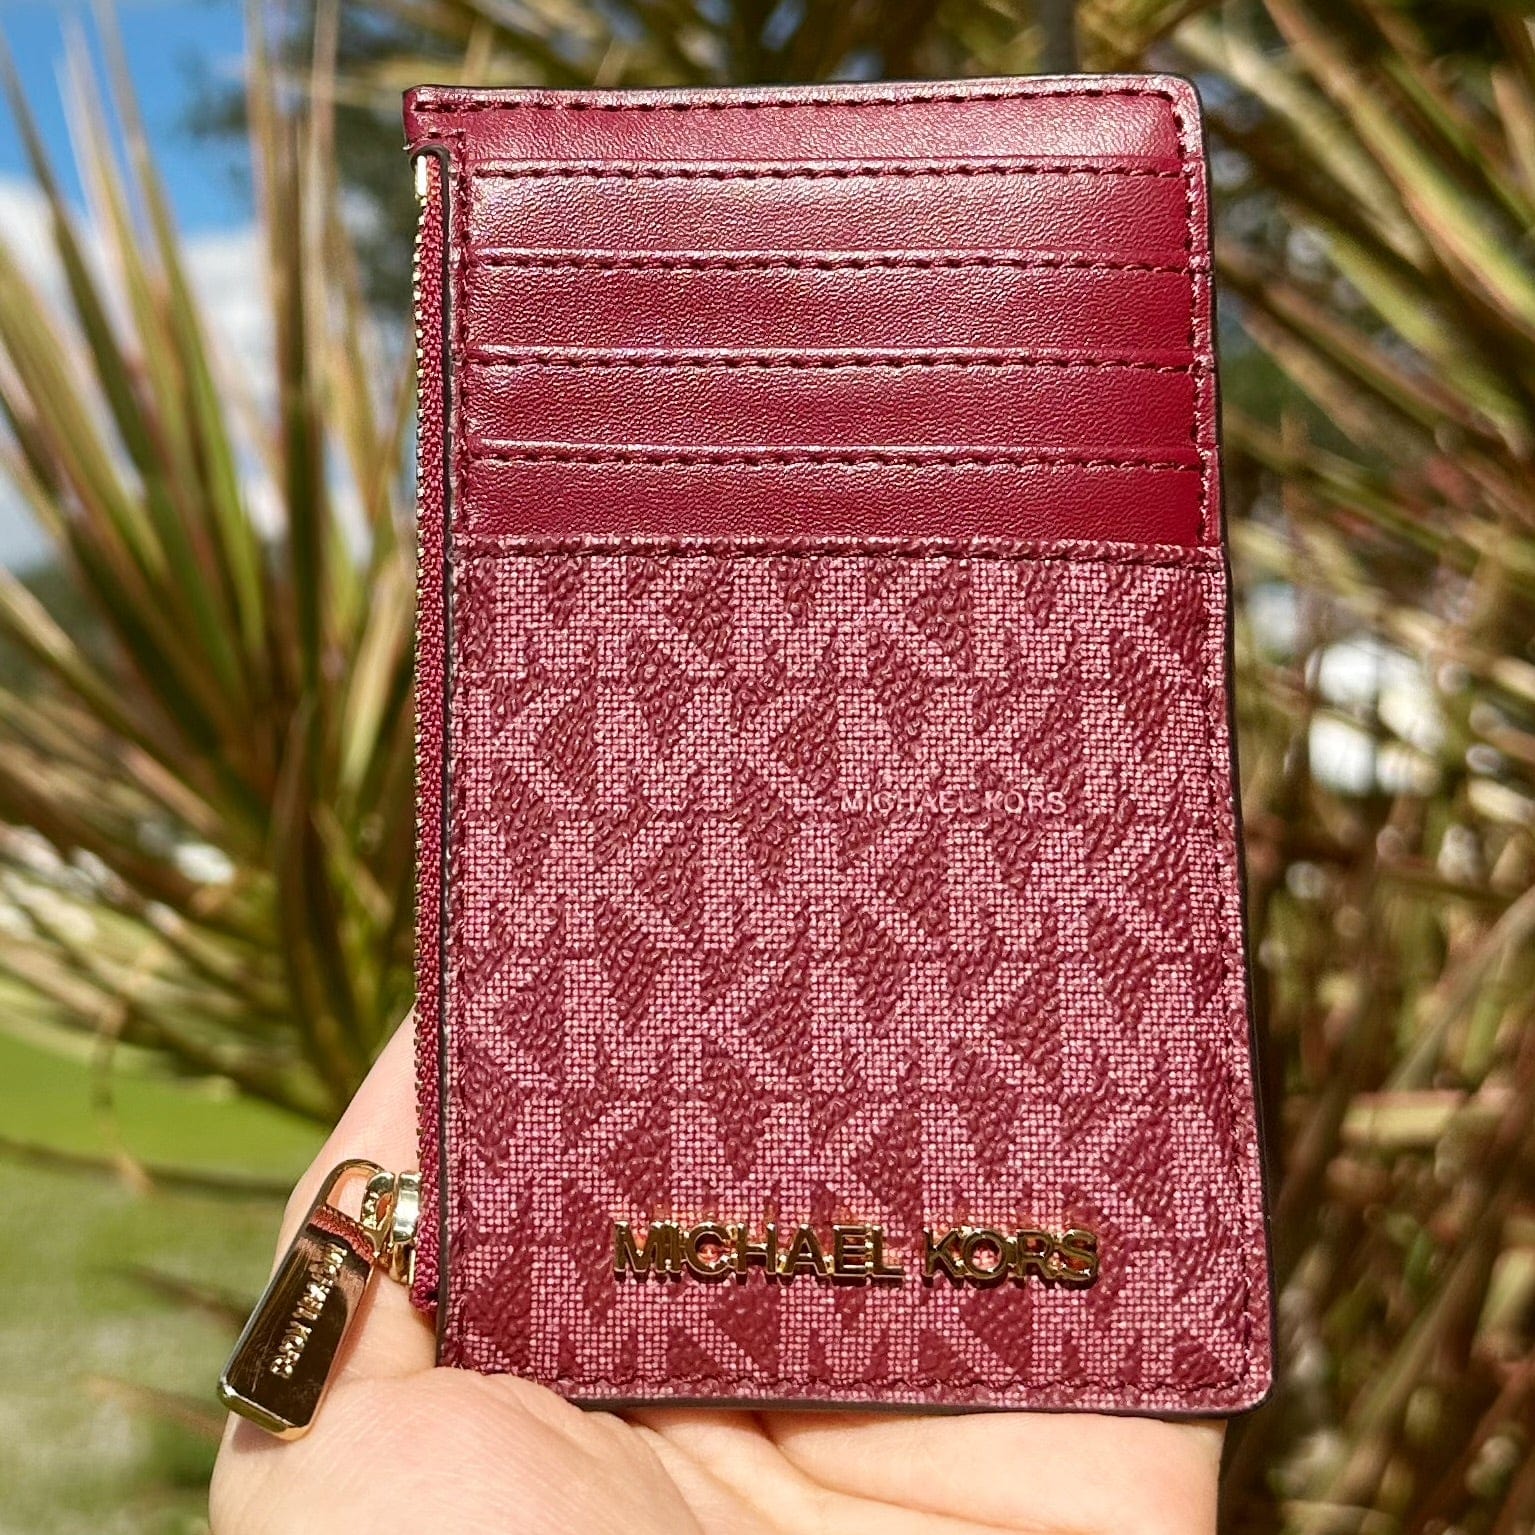 Michael Kors Jet Set Travel Medium Top Zip Card Case Wallet Coin Pouch Black